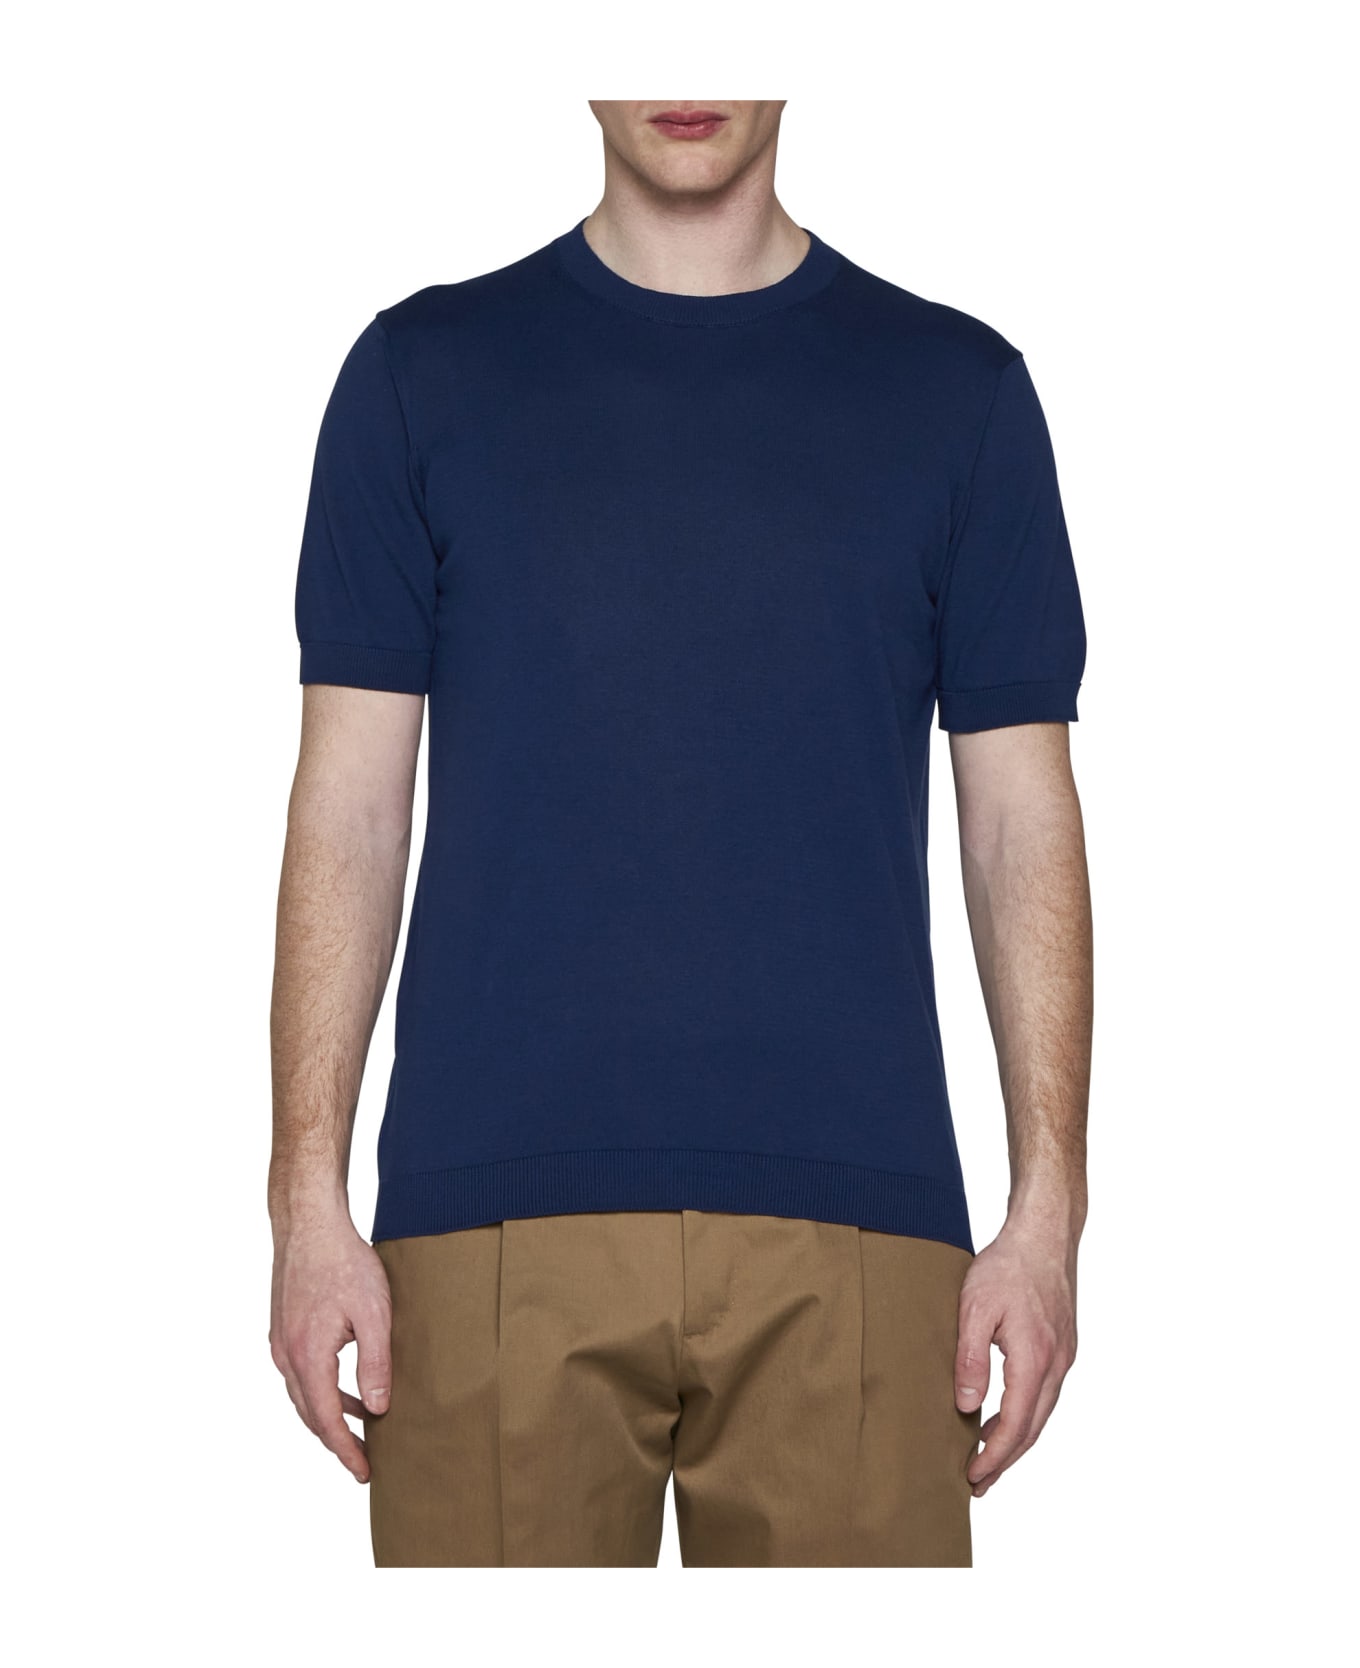 Tagliatore T-shirt - Blue